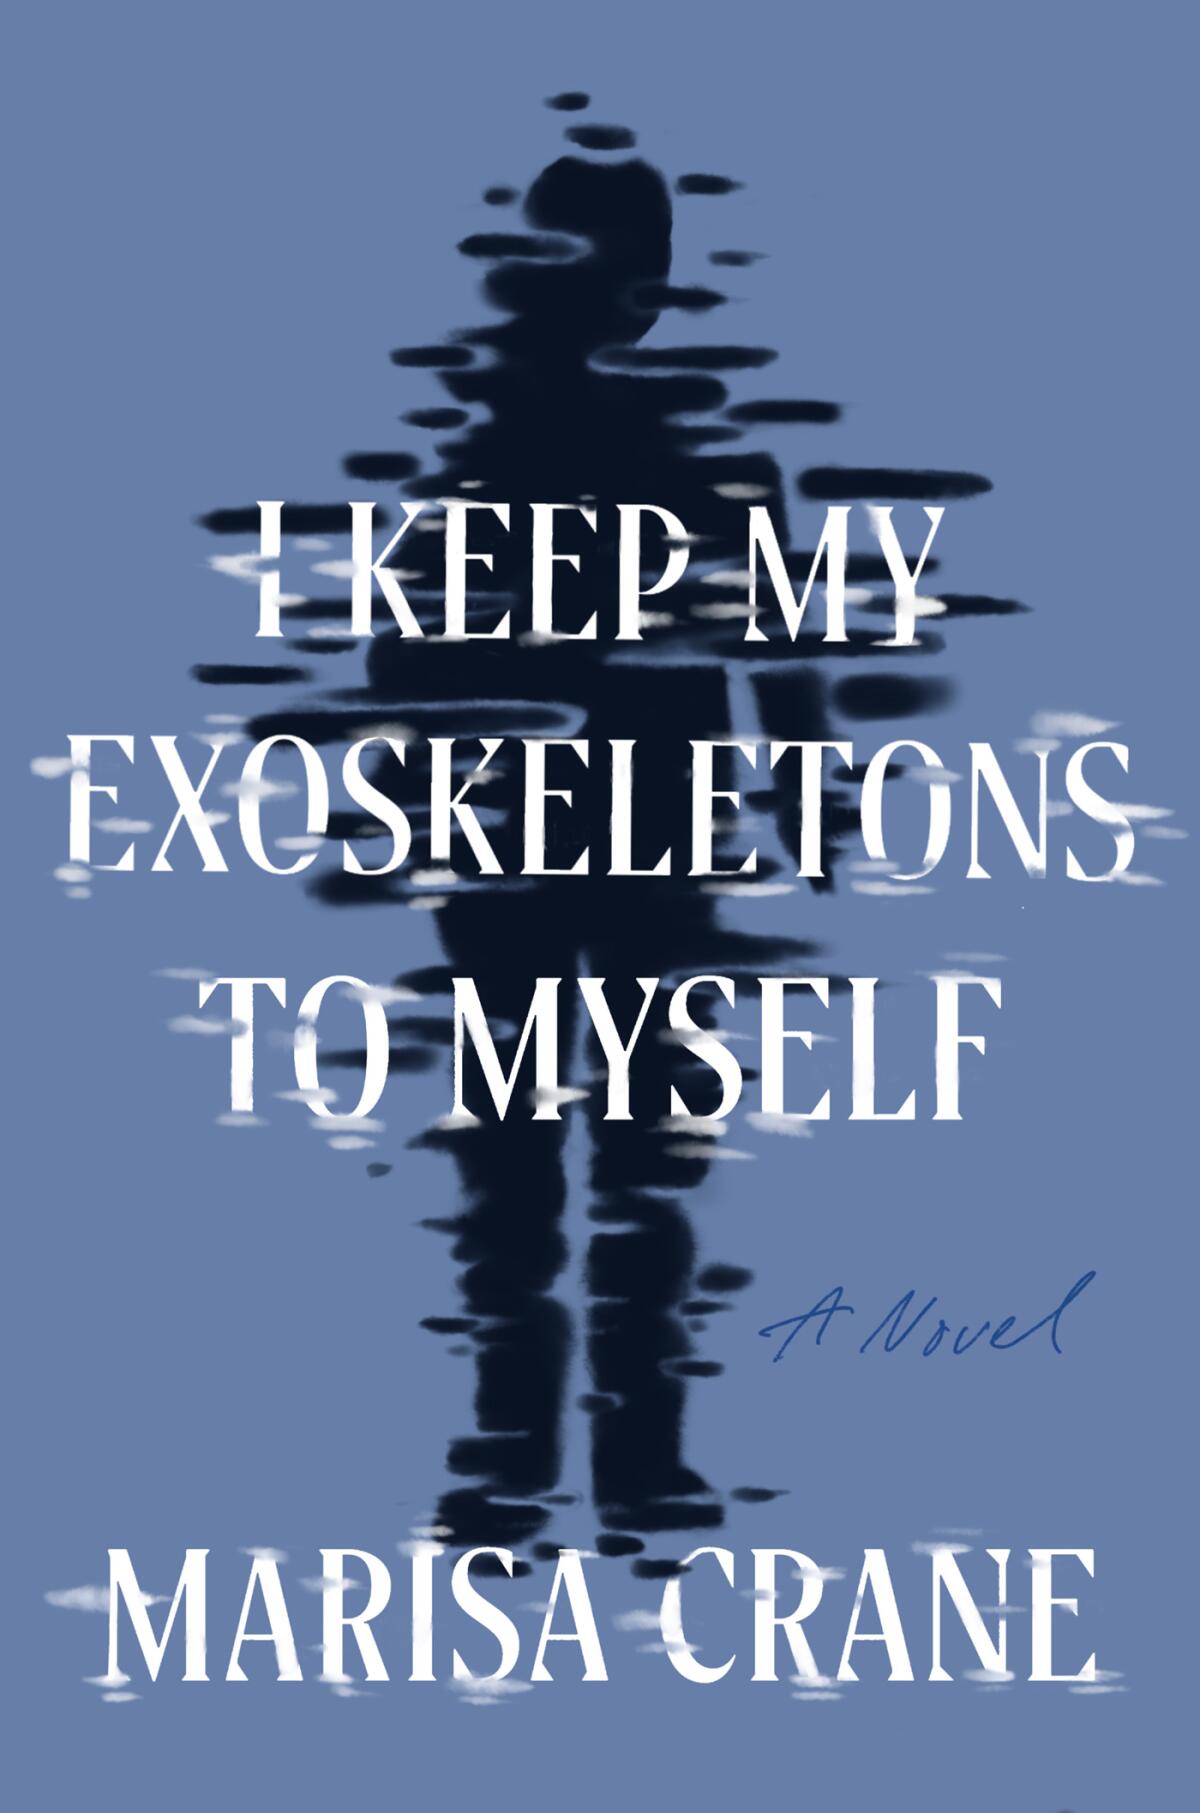 "I Keep My Exoskeletons to Myself," by Marisa Crane